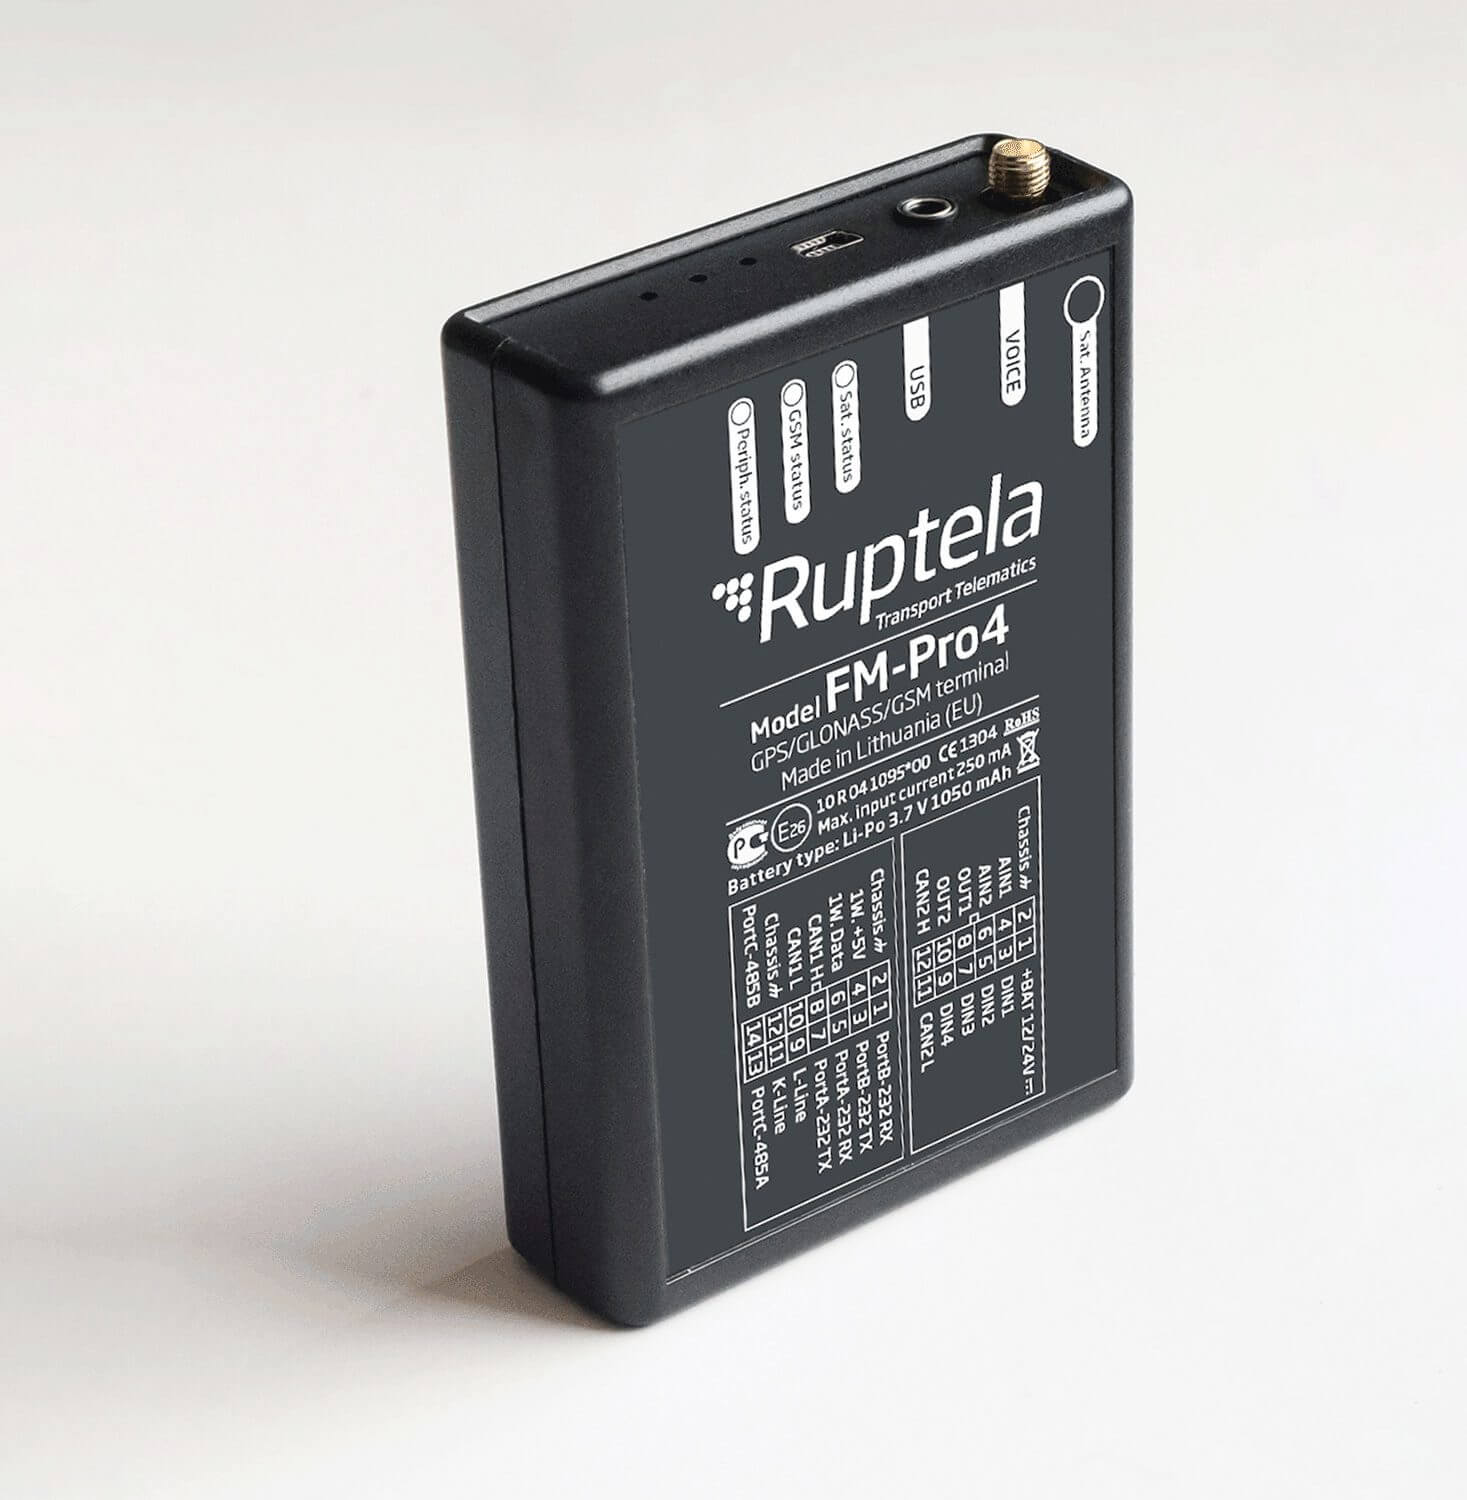 Ruptela FM-Pro4 GPS tracker